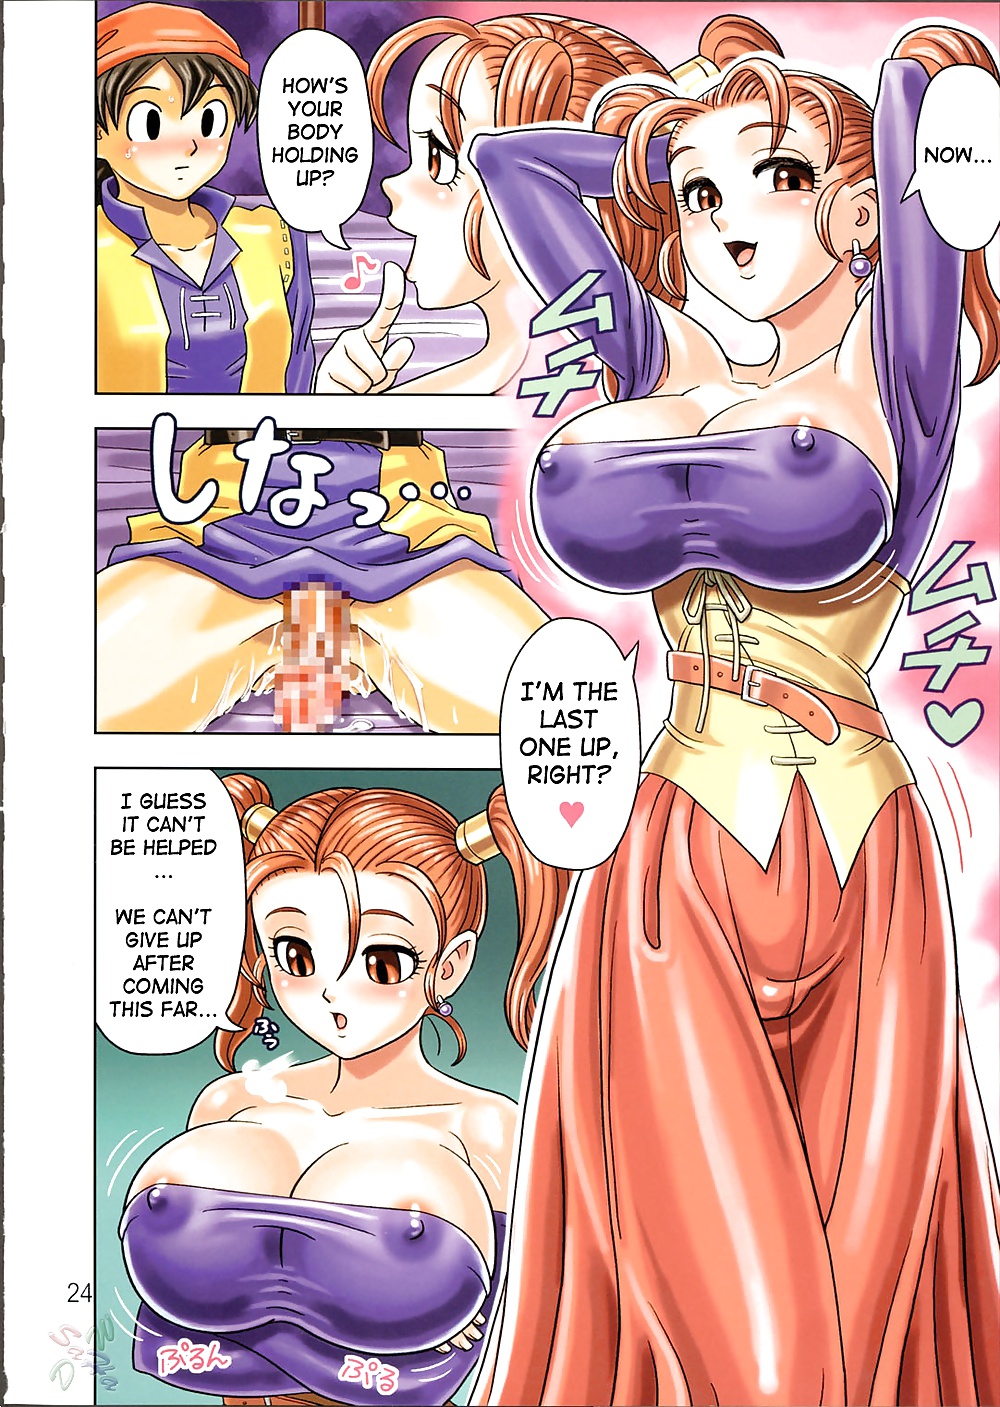 Pervertiert Hentai Comic-Mädchen In Der Heißen Knappen Outfits! #9350342